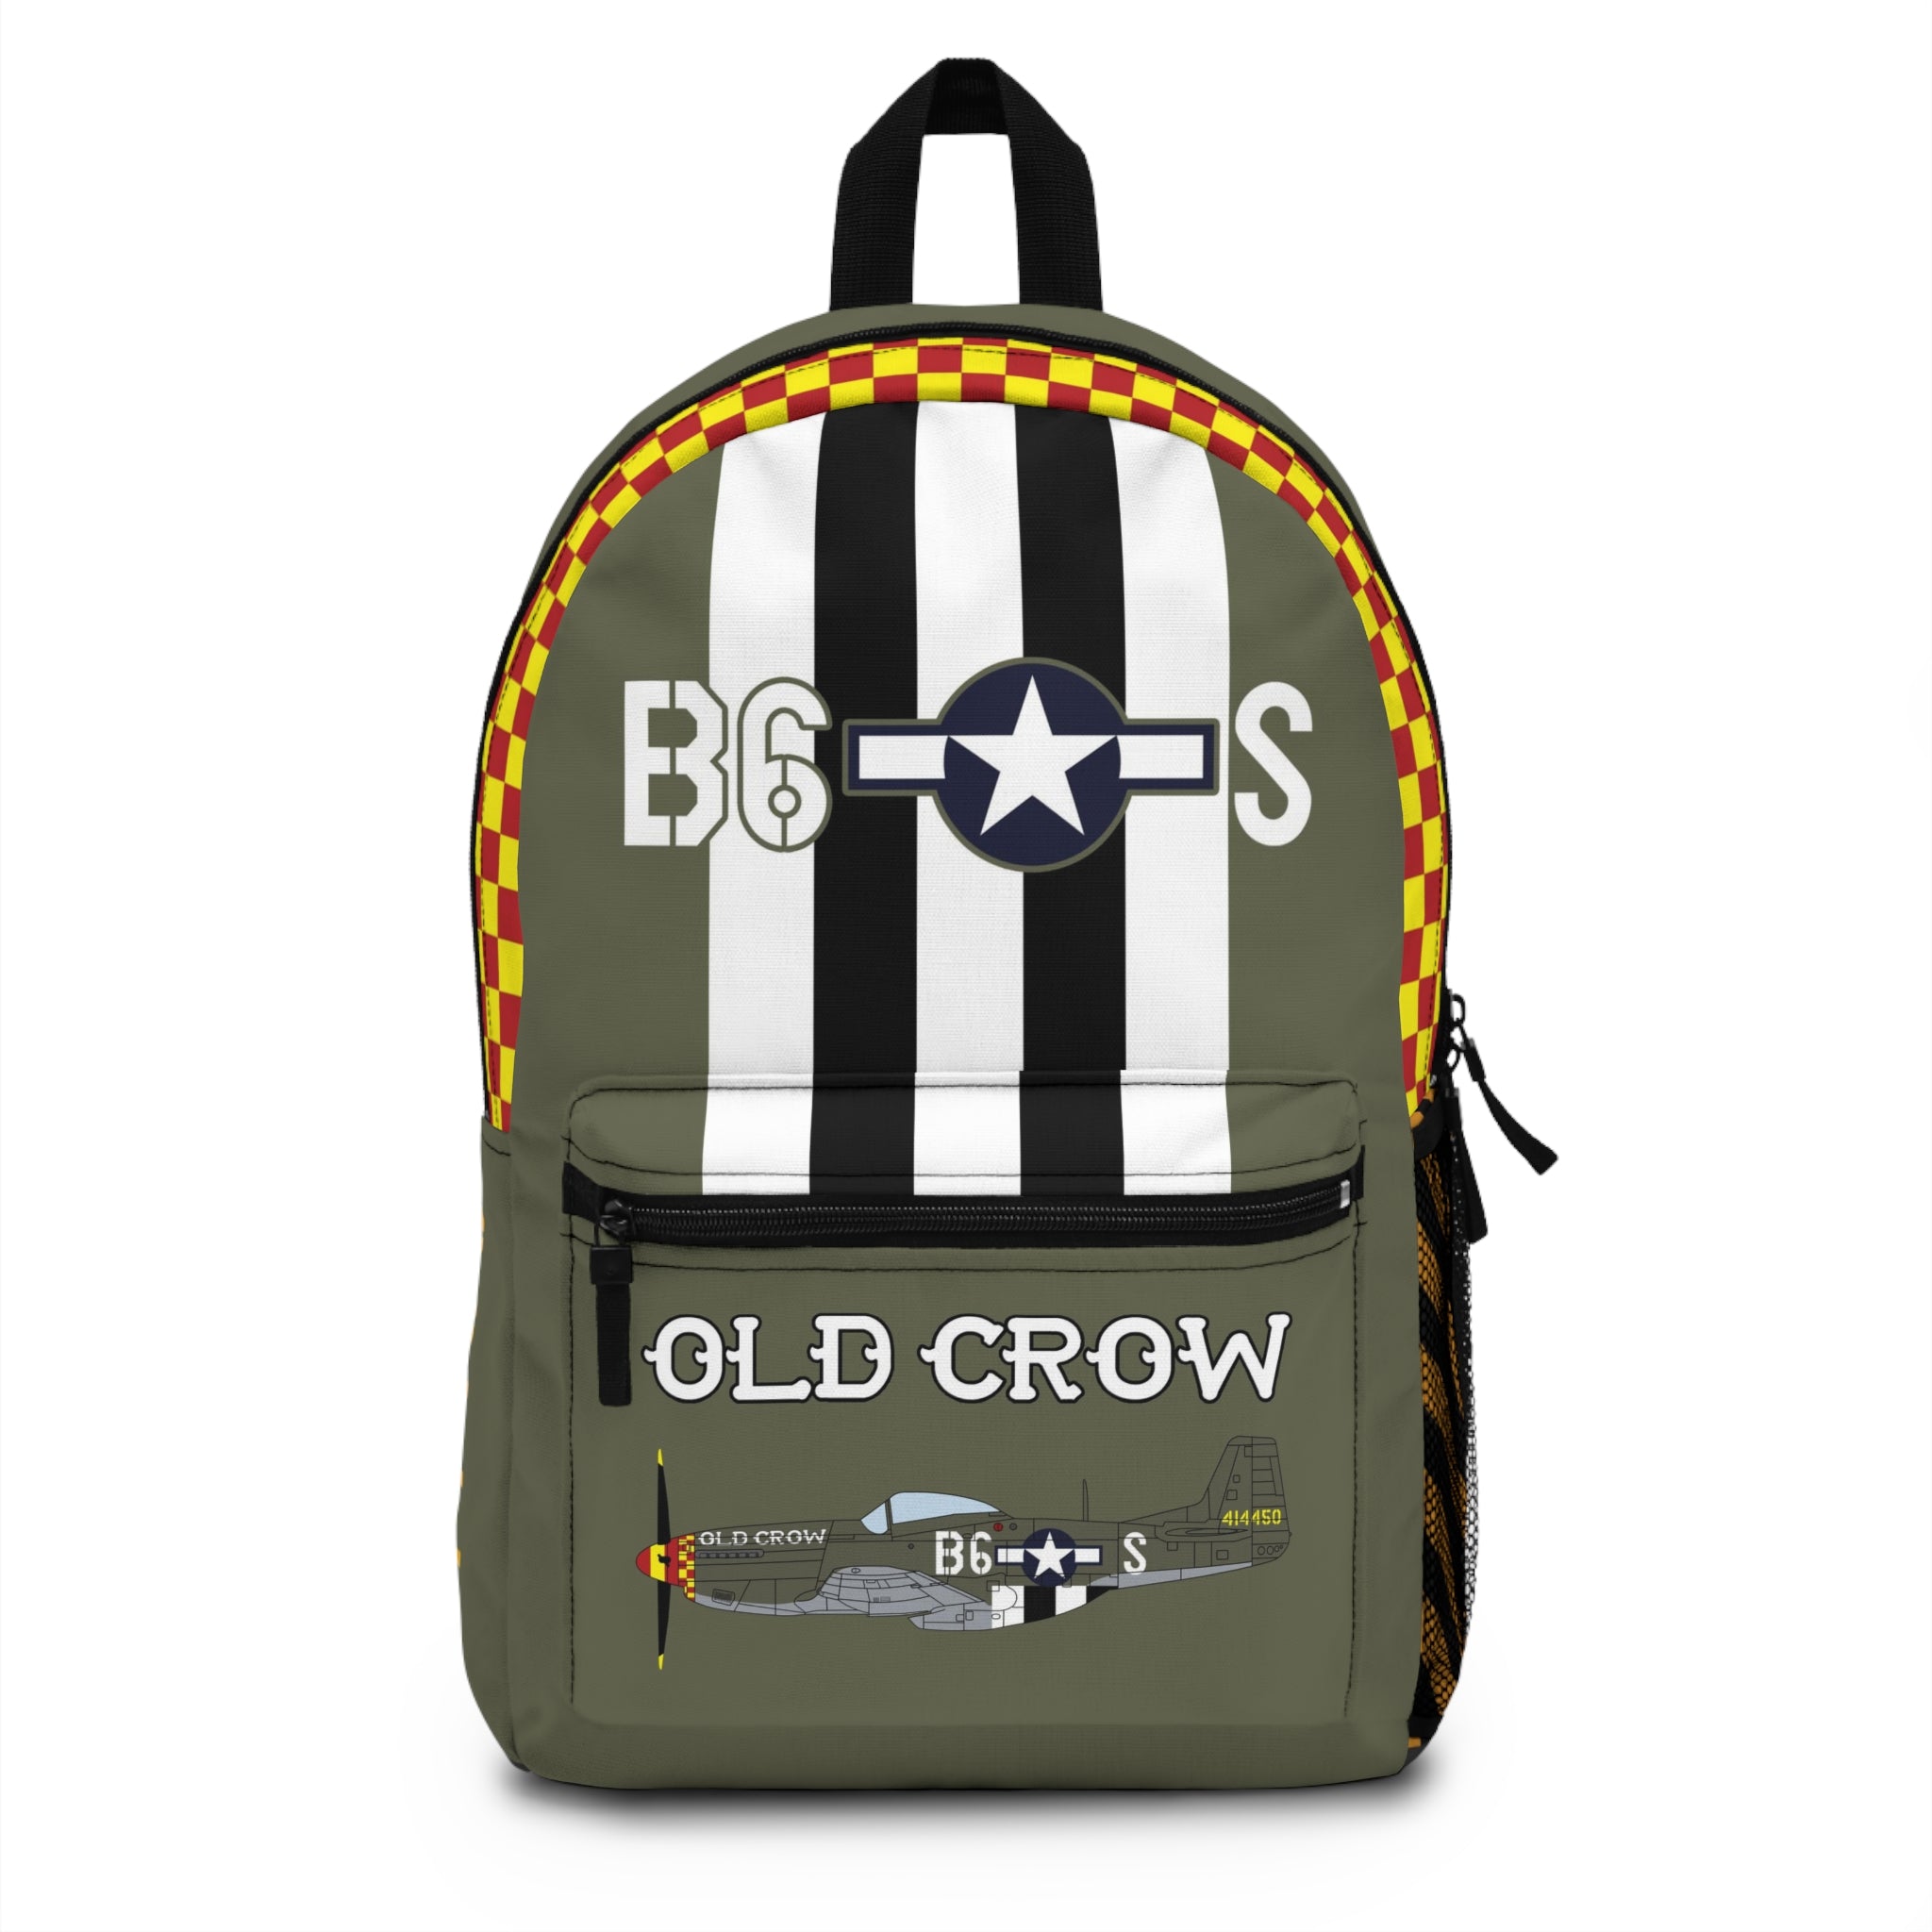 P-51 "Old Crow" Backpack - I Love a Hangar